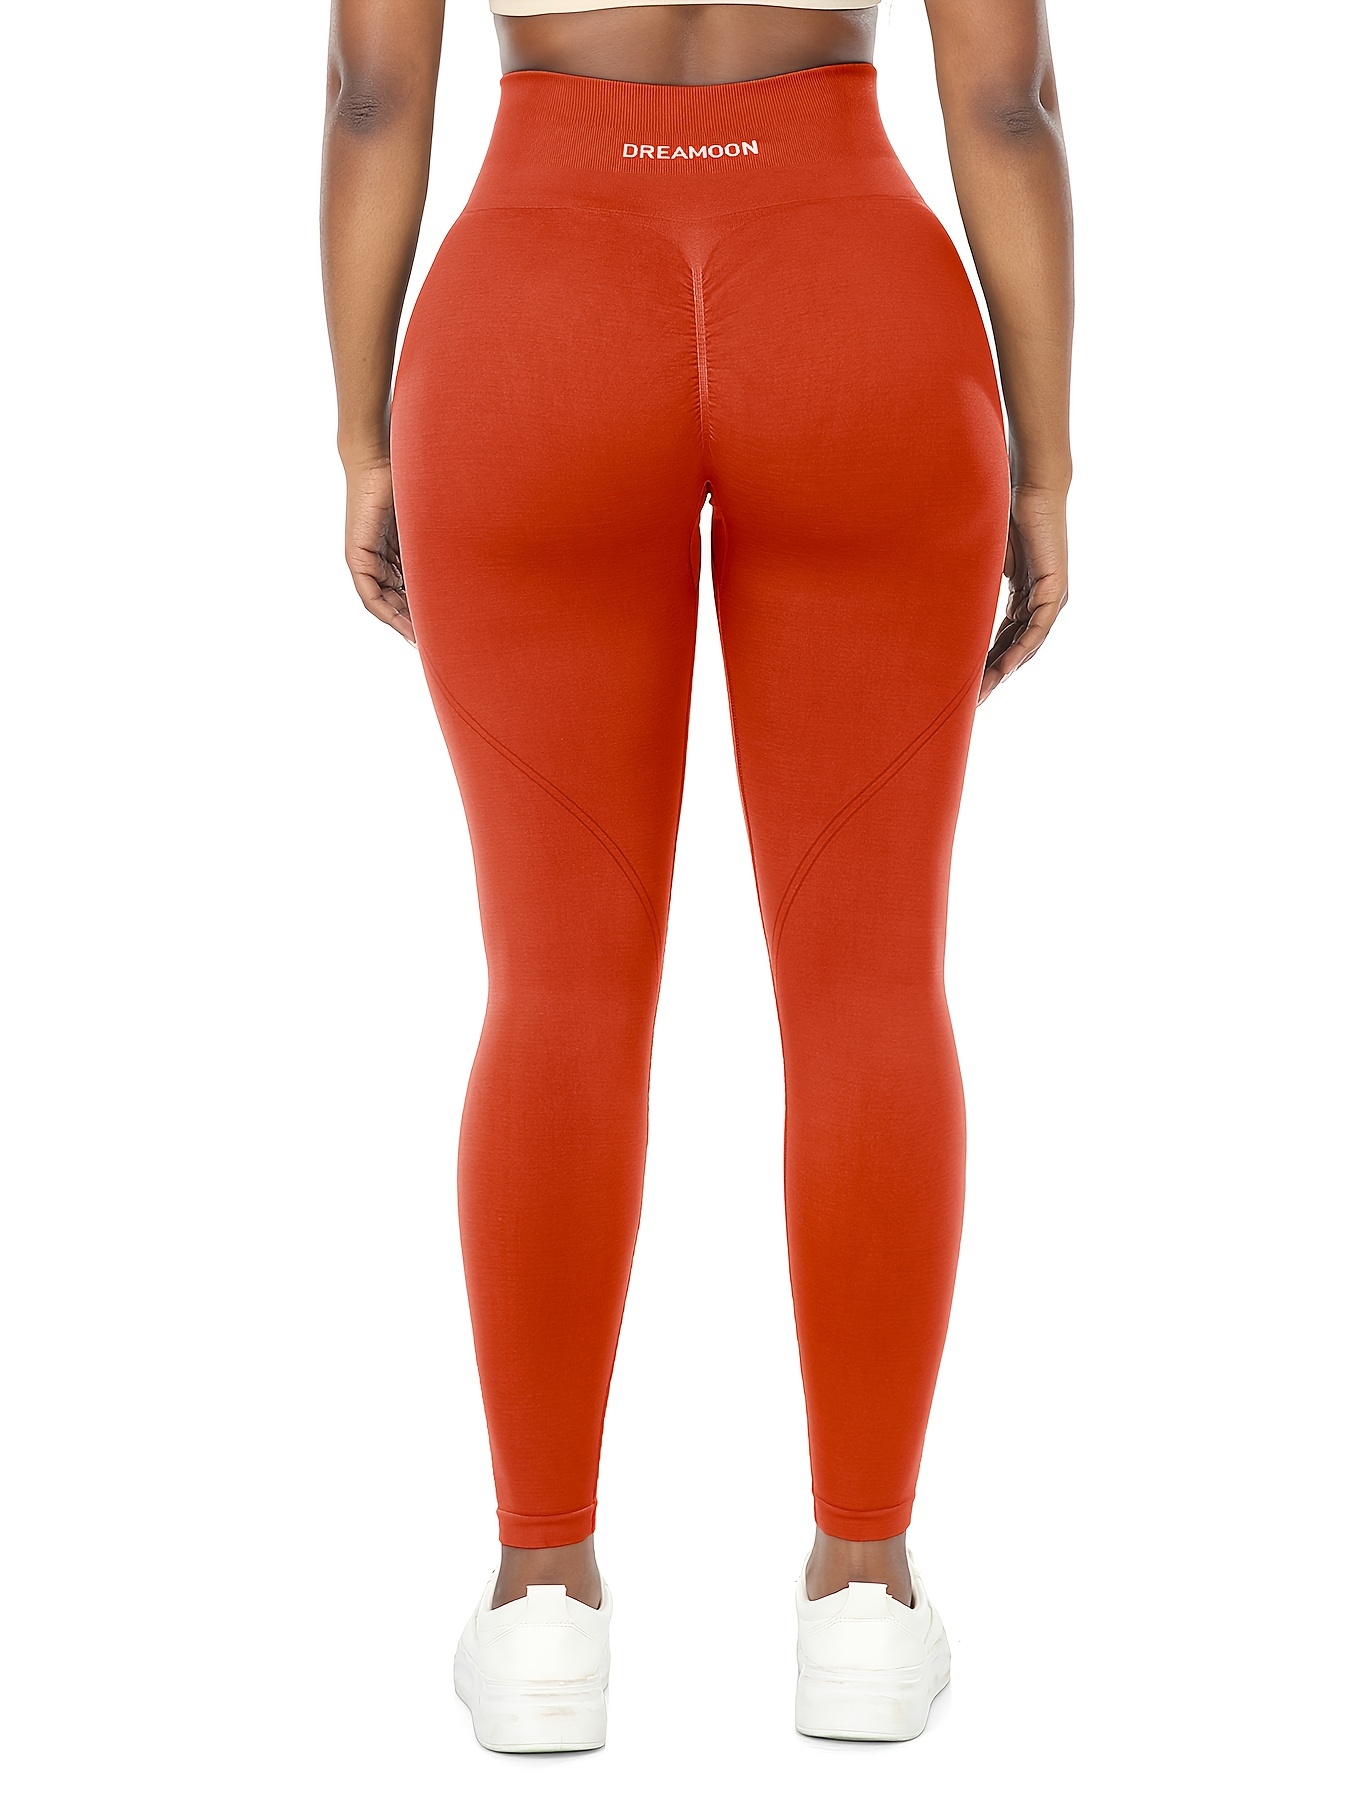 ROOOKU Uplift Squat Proof Workout Leggings for Women Anti-Ripped Scrunch  Butt Lifting Gym Booty Seamless Yoga Pants-Brick Orange